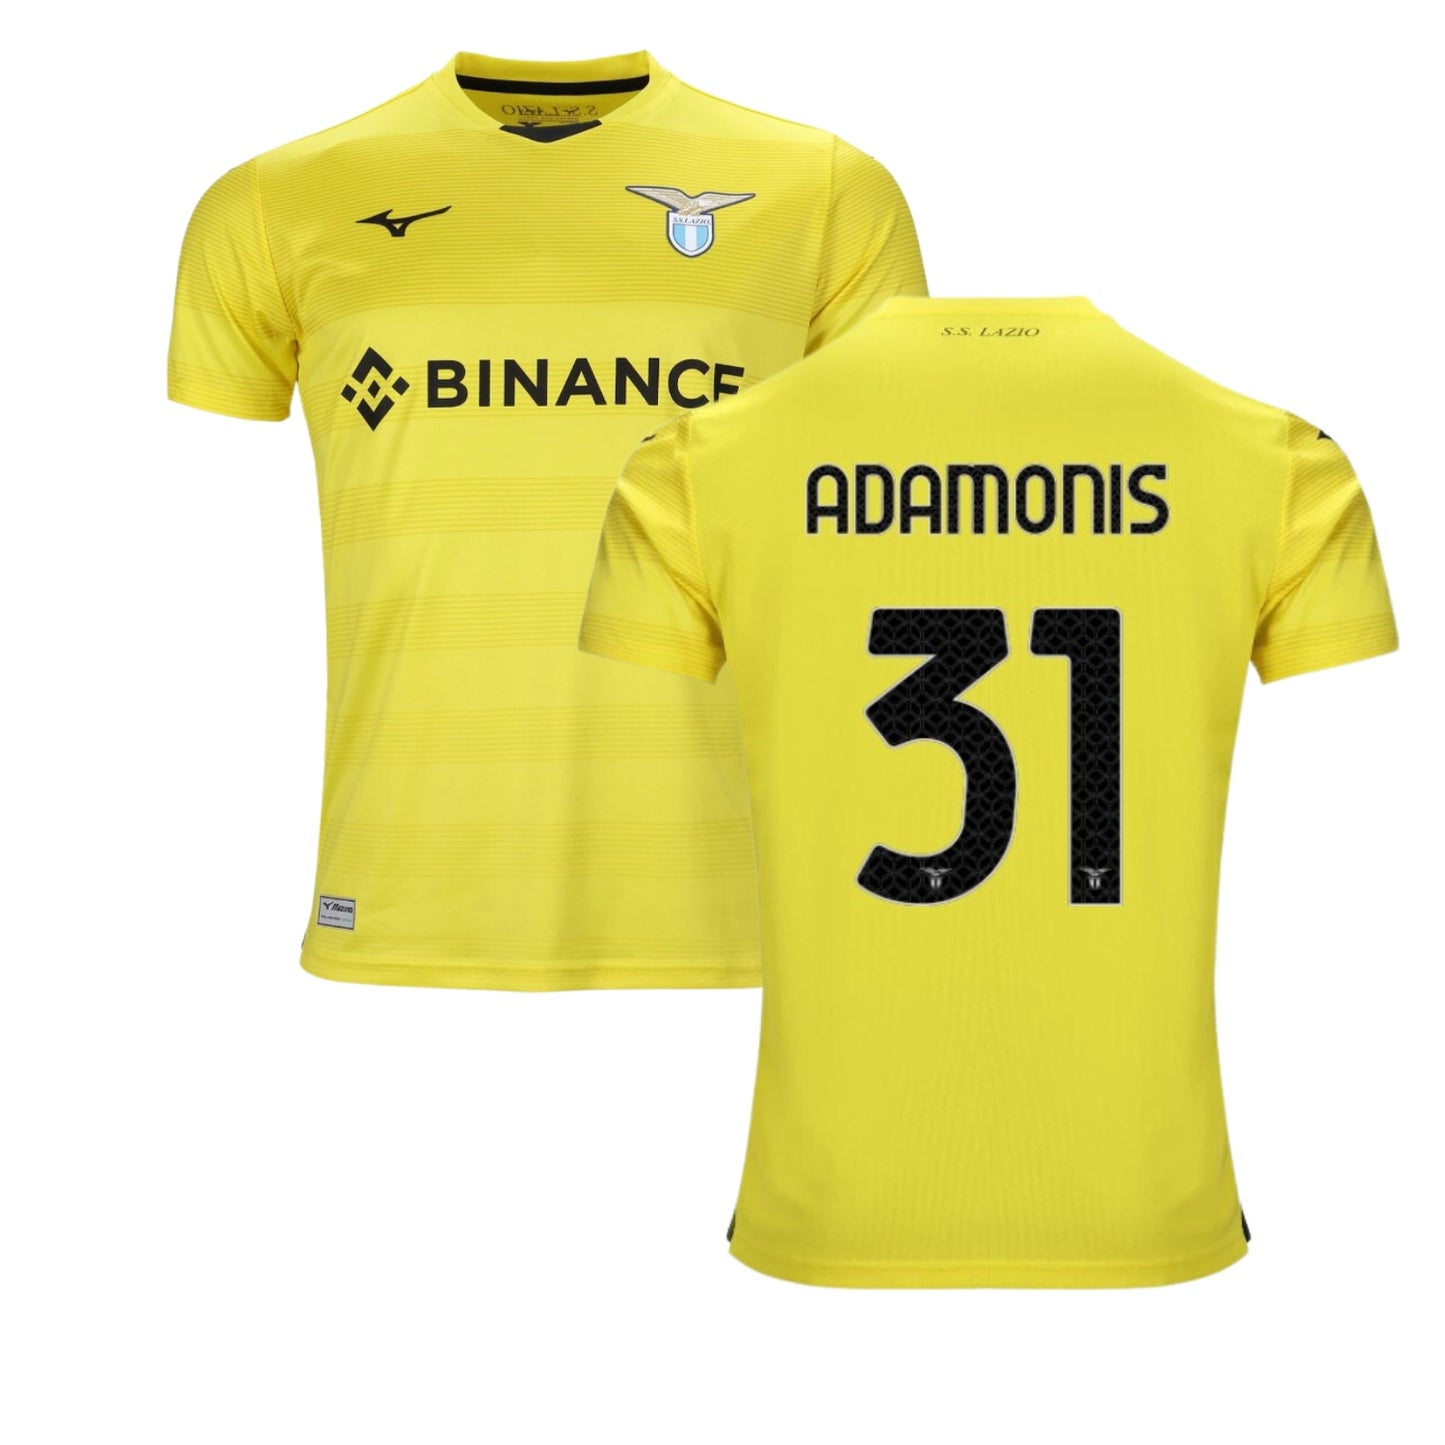 Marius Adamonis Napoli 31 Jersey